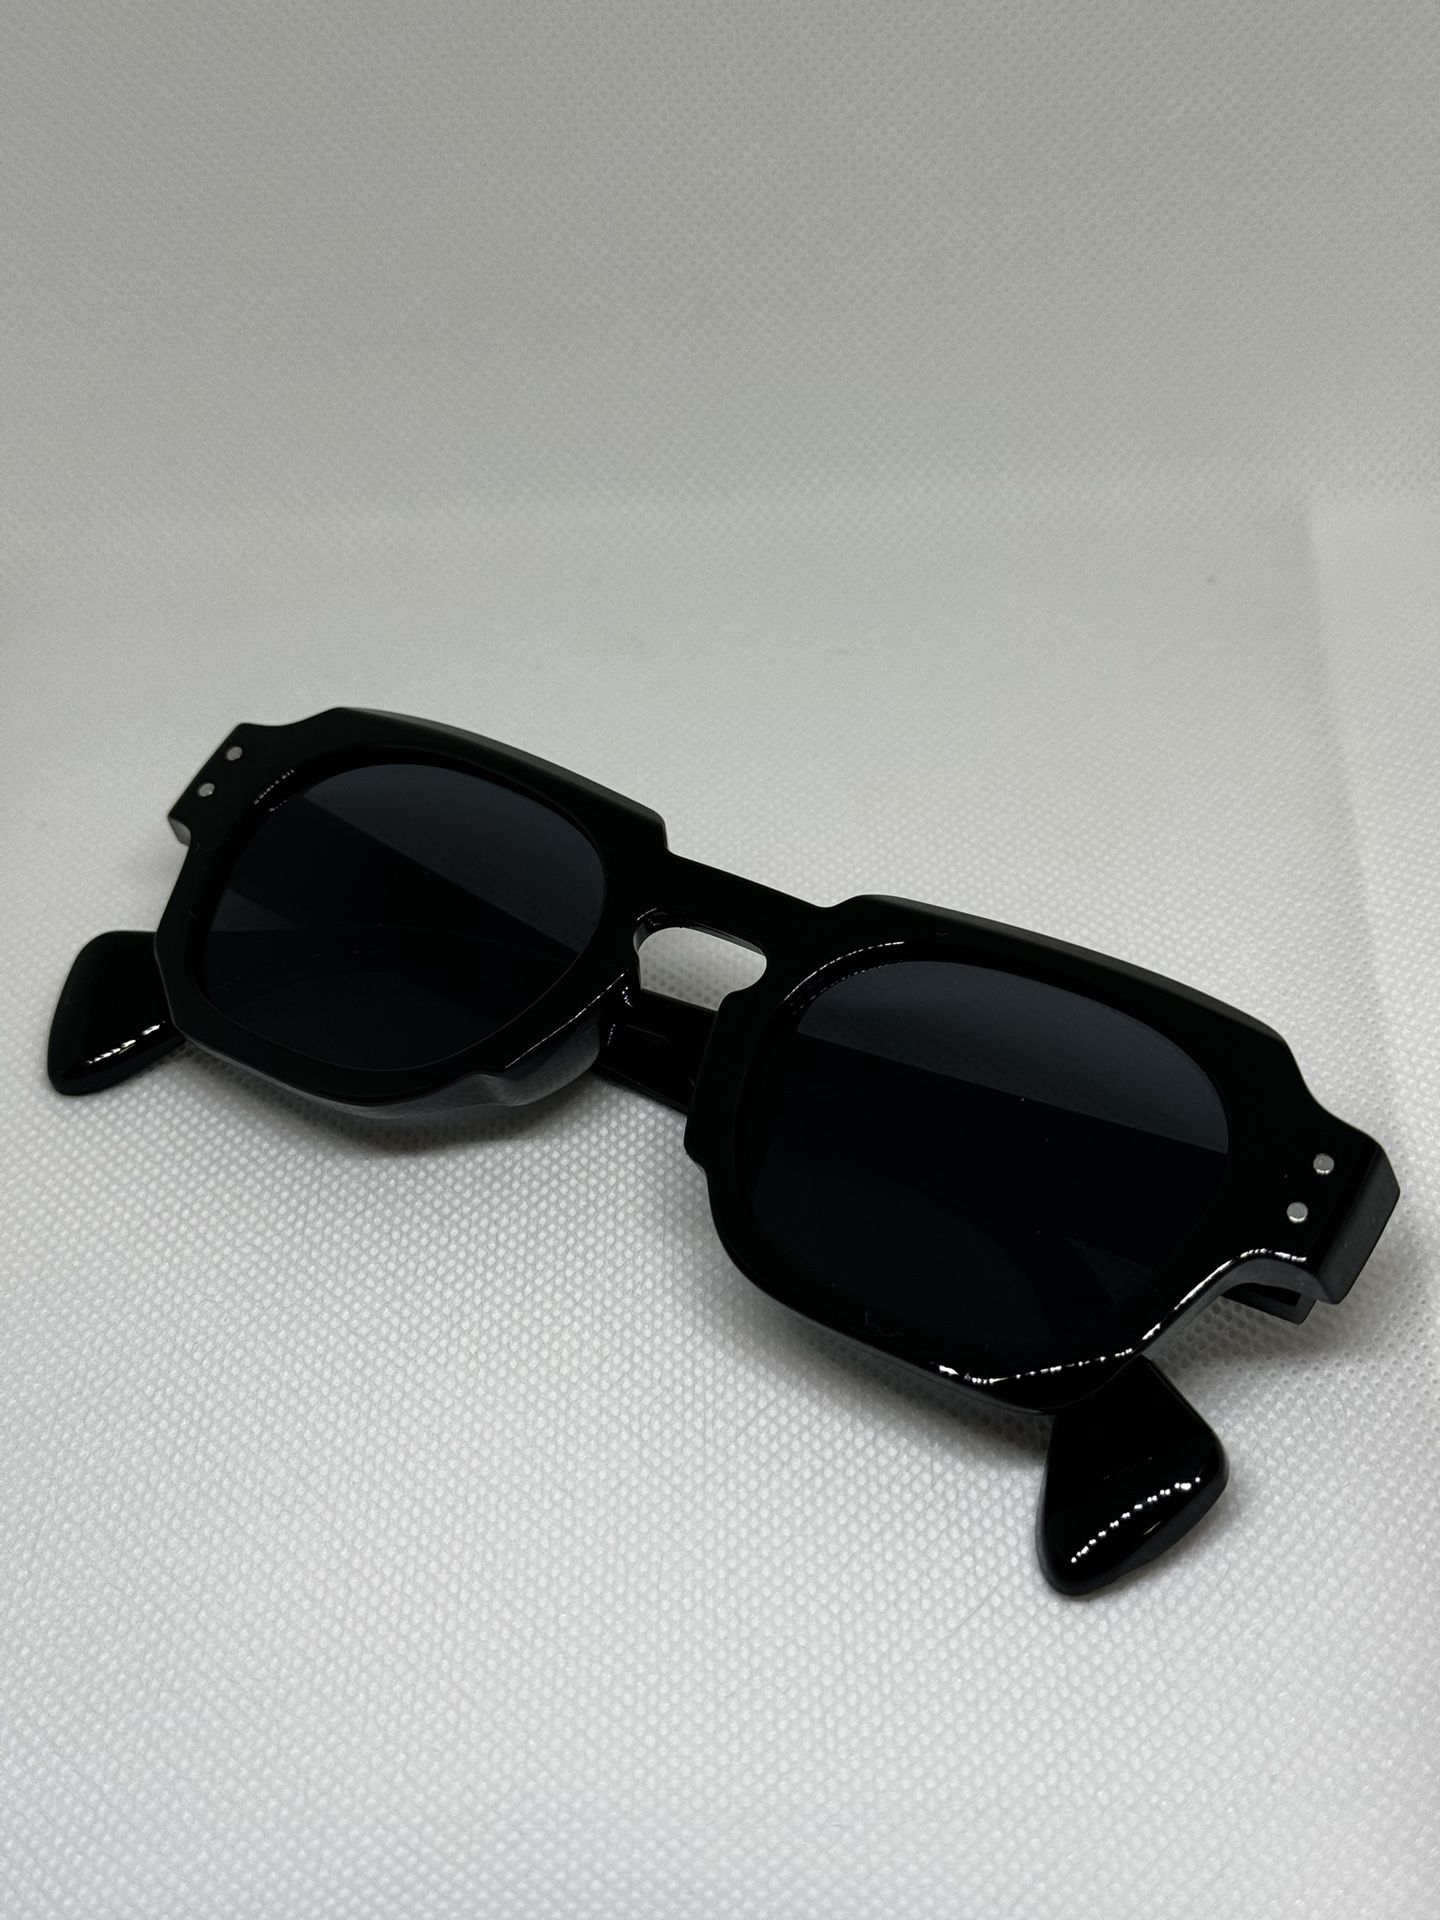 Square retro fashion sunglasses for women and men, vintage anti-glare sun visors for parties, beach travel, fashion sunglasses